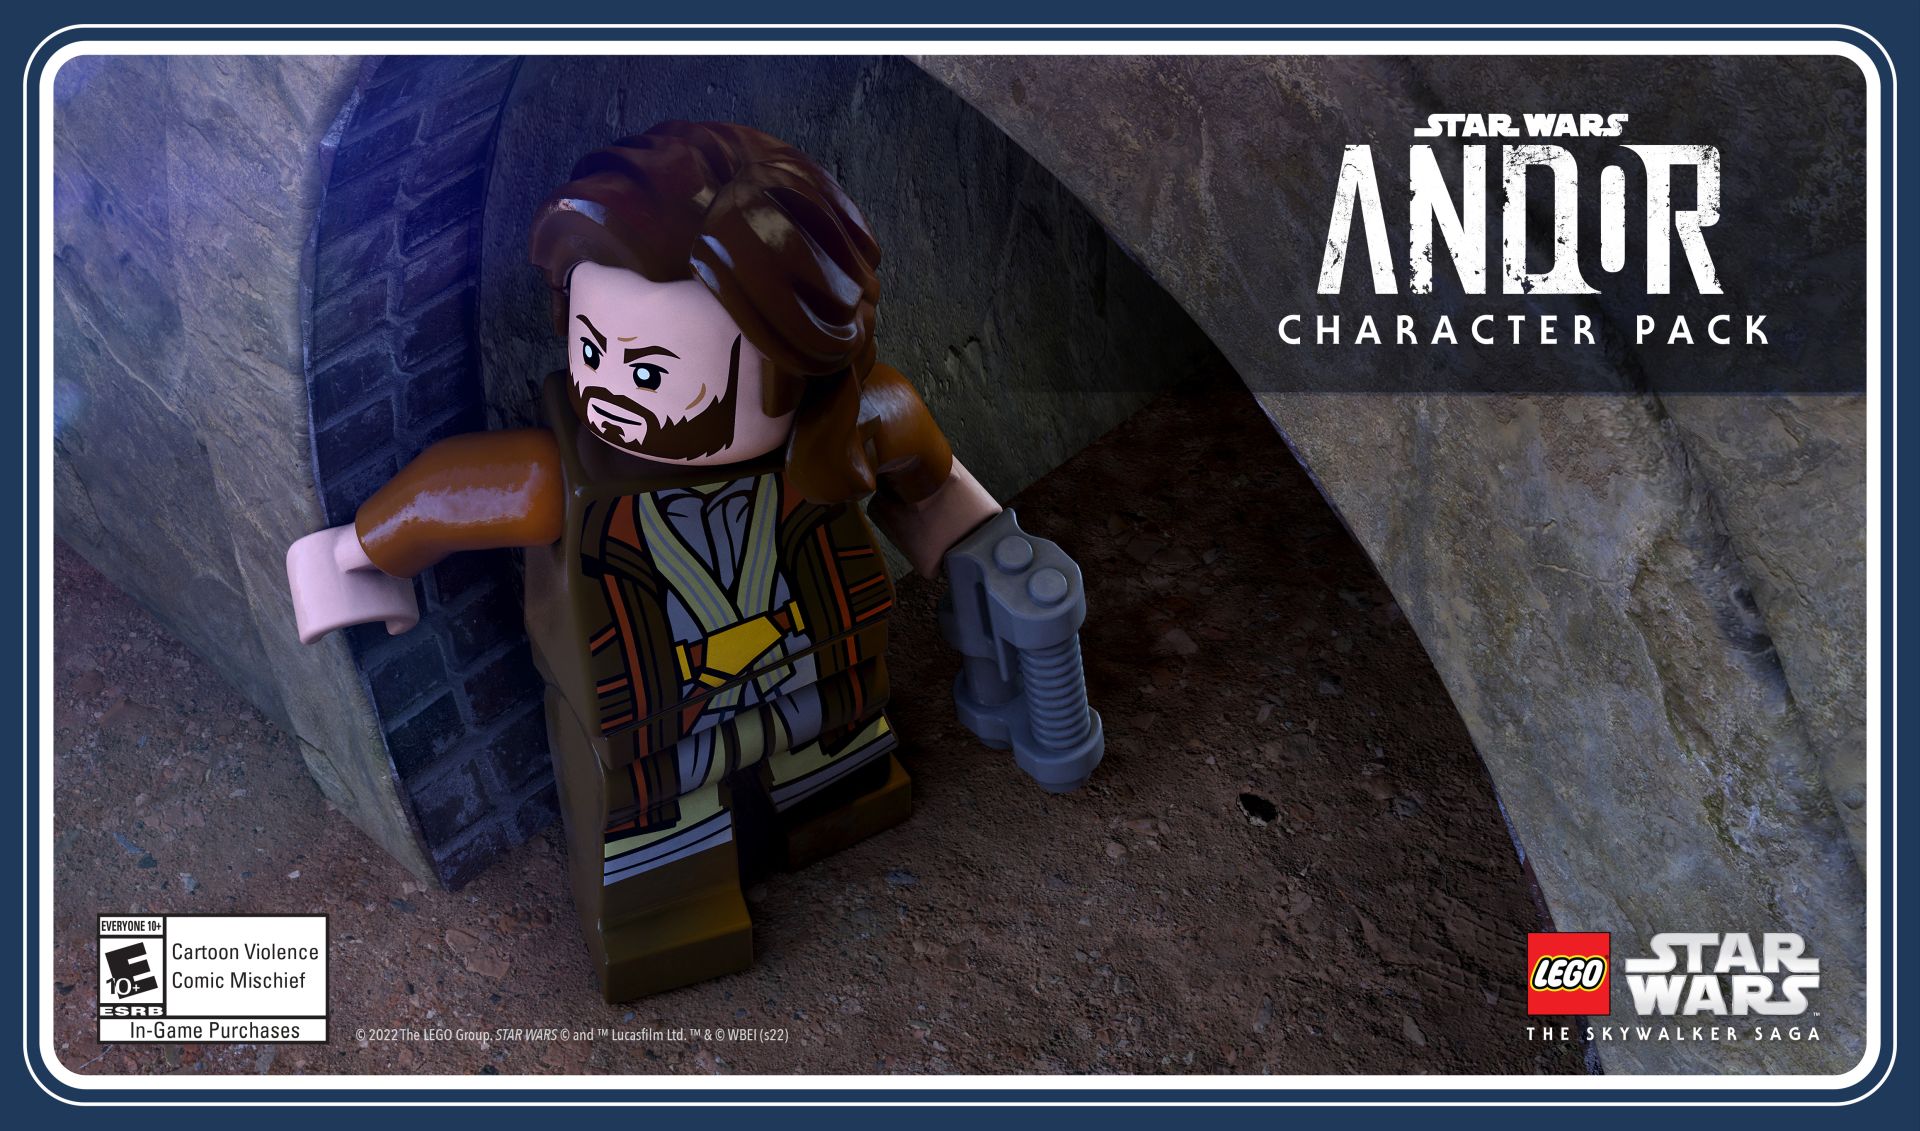 LEGO Star Wars - The Skywalker Saga_Star Wars Andor